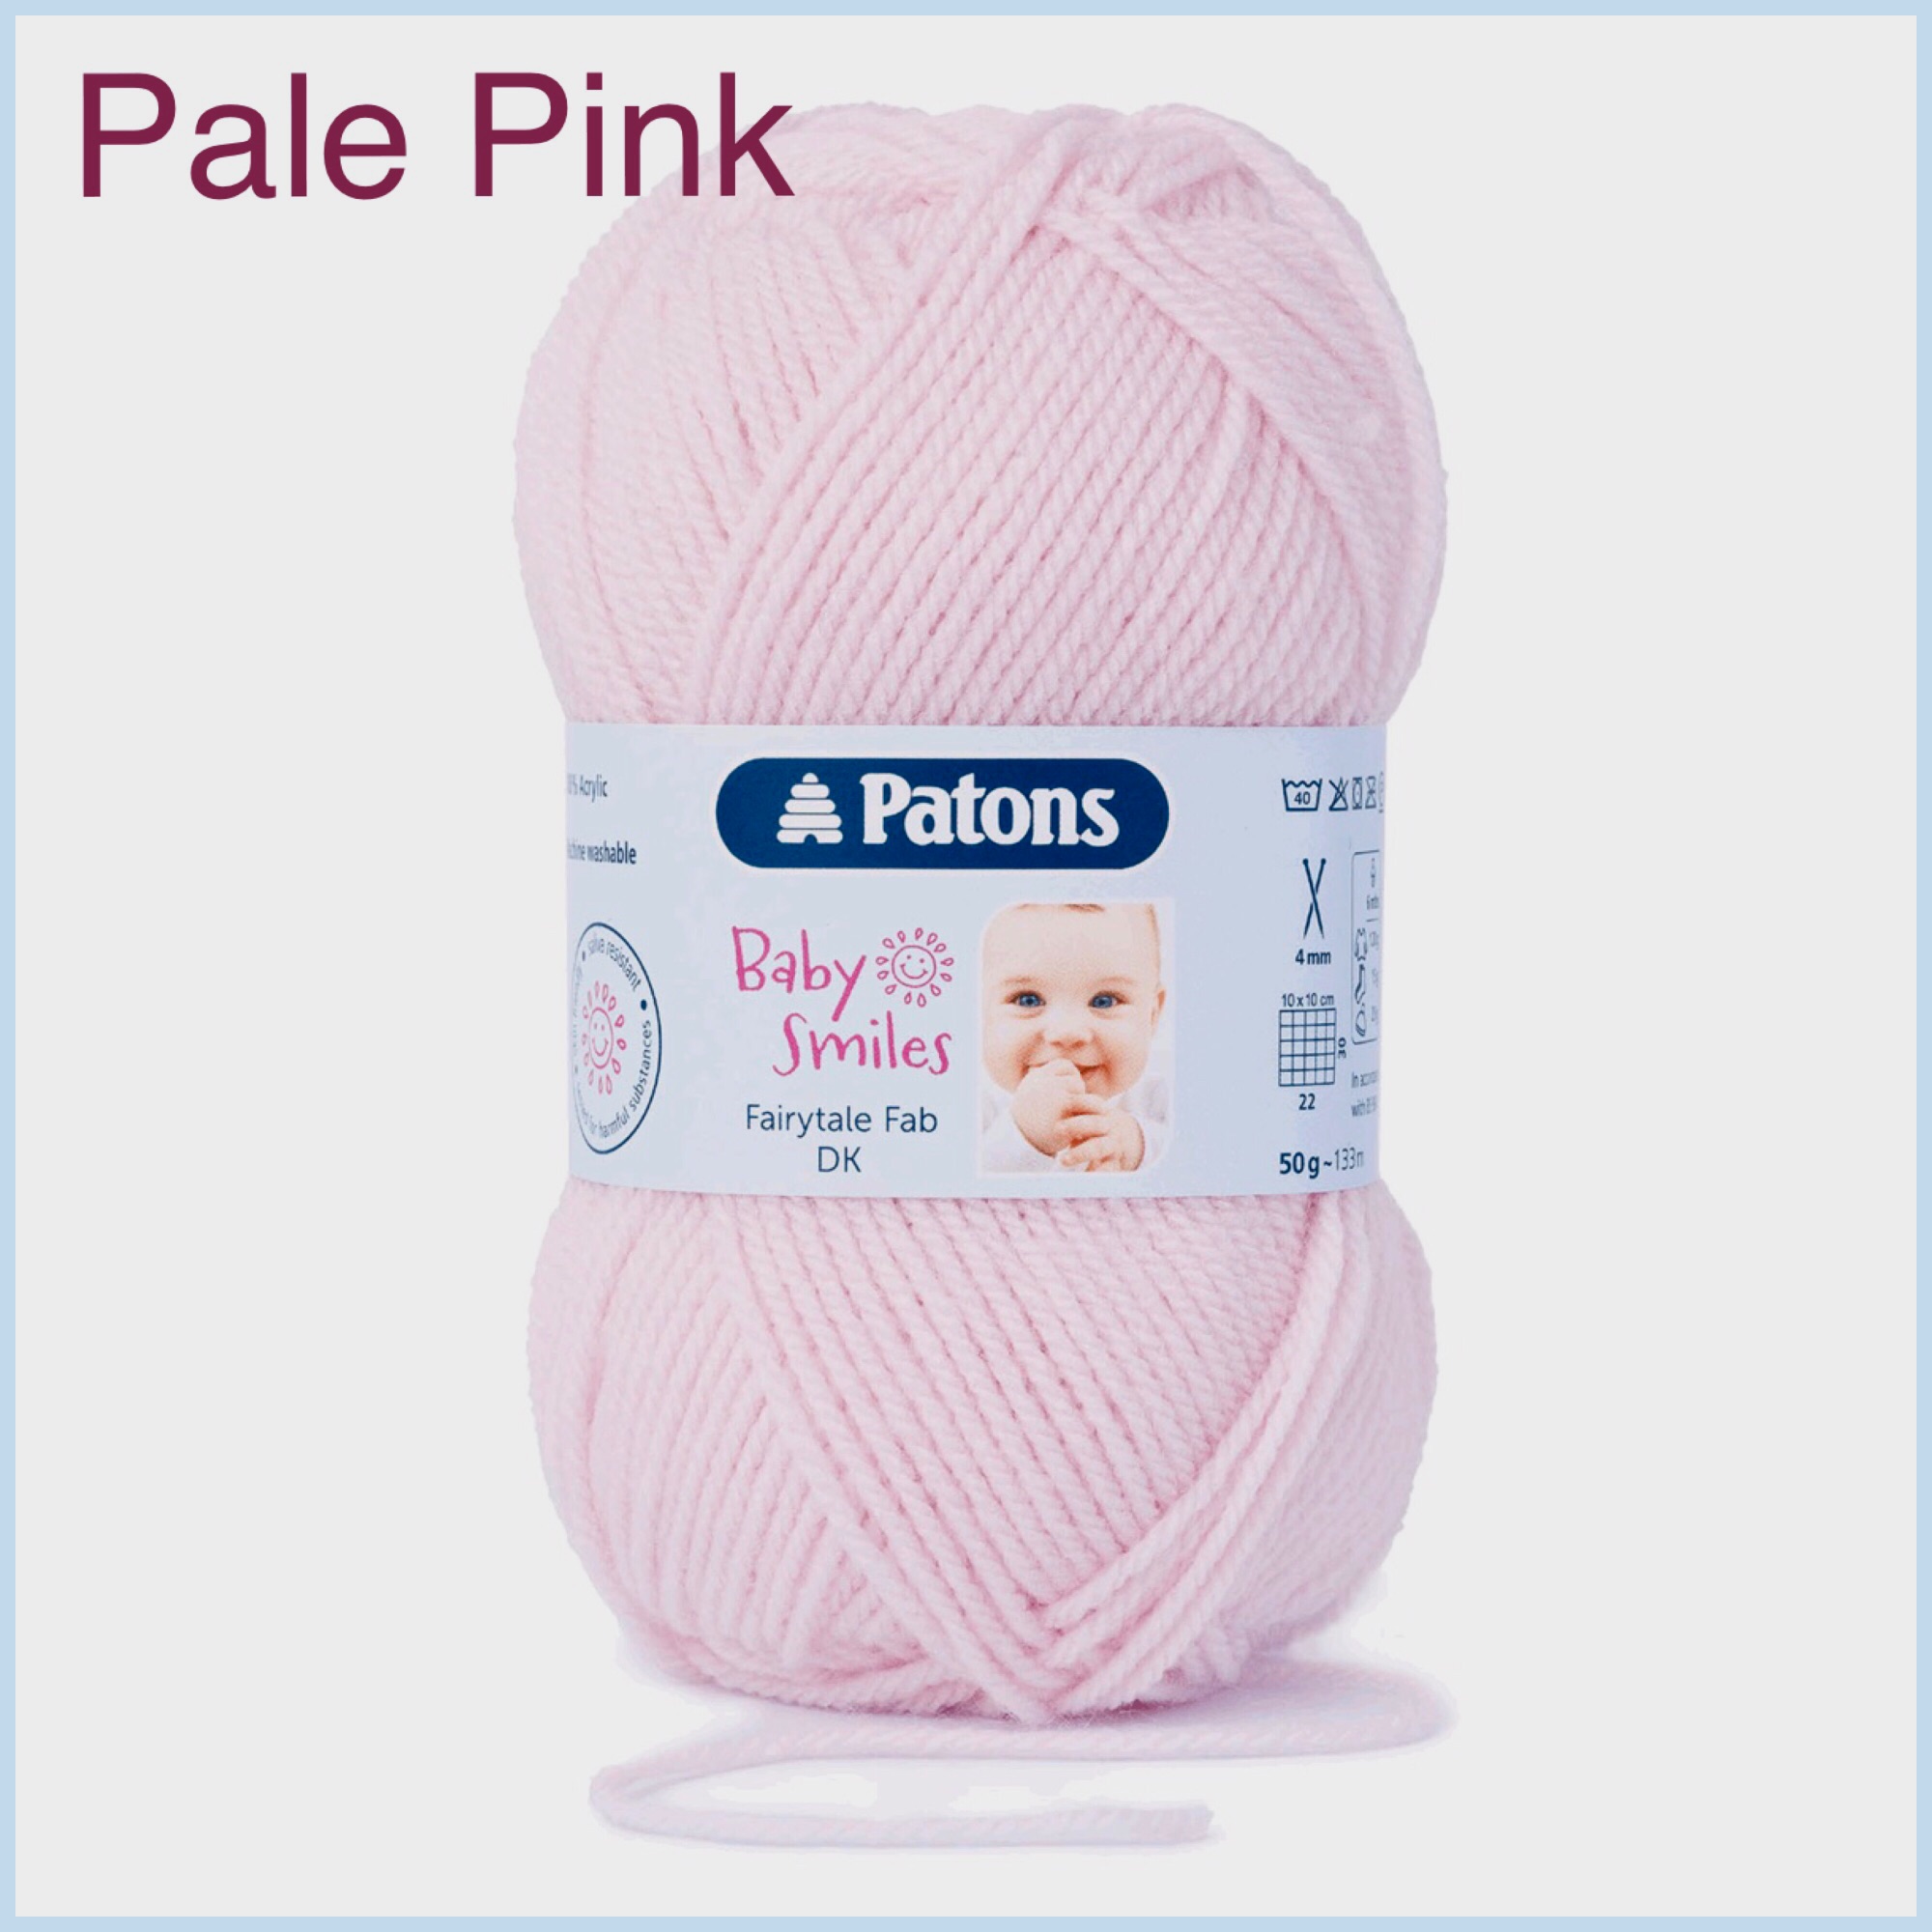 Patons farytale fab DK baby smiles pale pink loom knitting crochet yarn